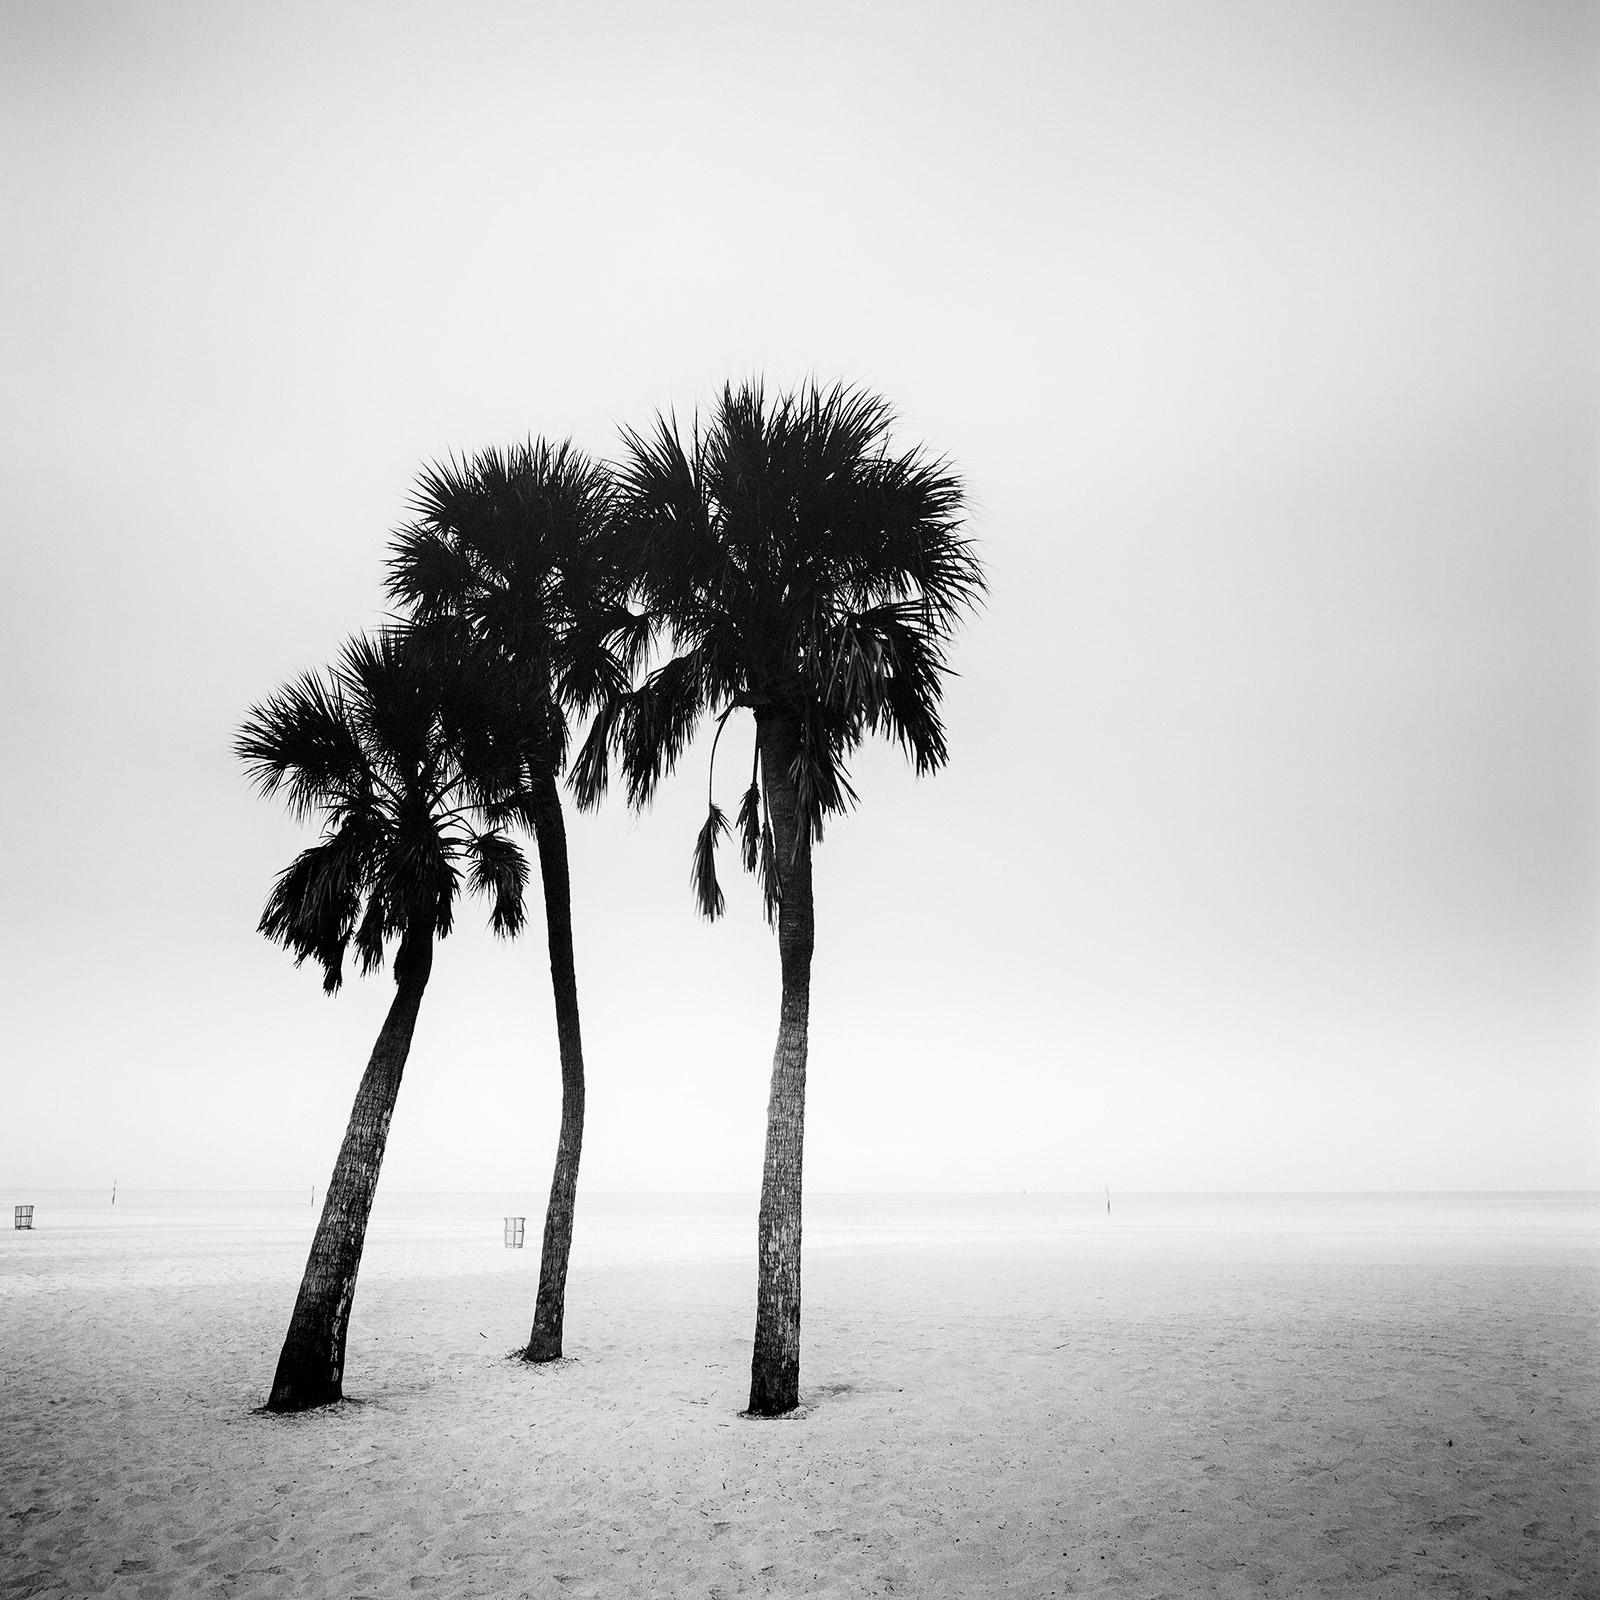 Black and White Photograph Gerald Berghammer - Palmiers, lonley beach, Floride, USA, photographie noir et blanc, paysage